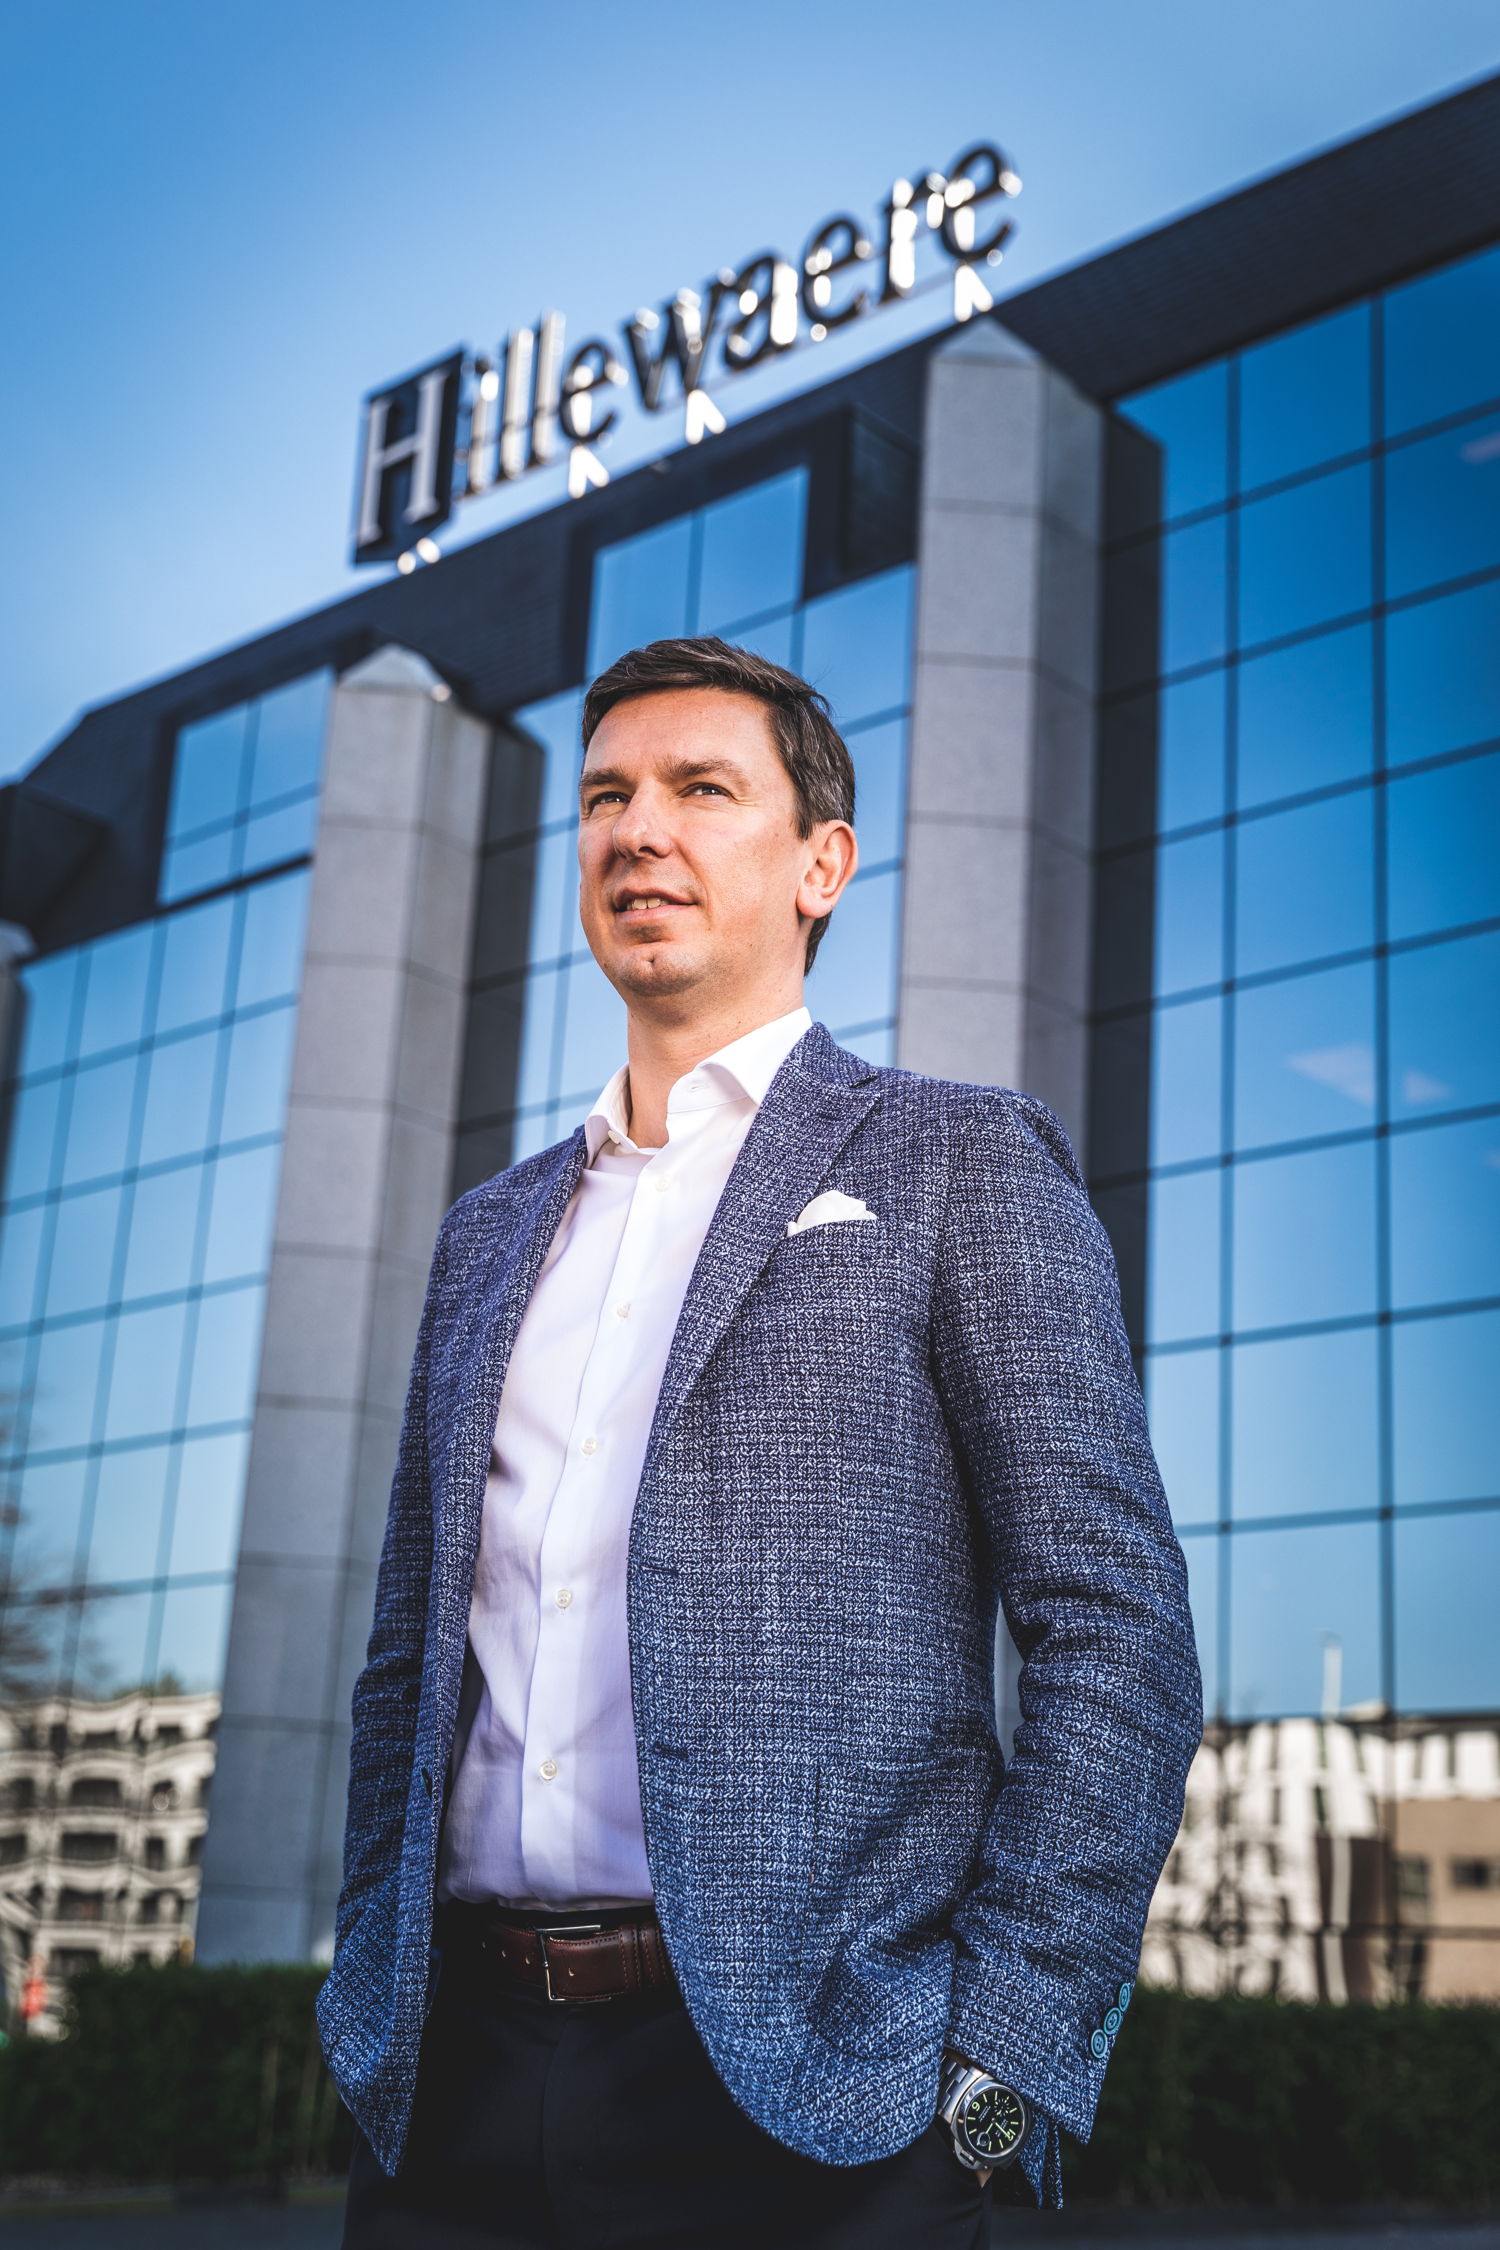 Roel Druyts, CEO van Hillewaere Groep, aan het hoofdkantoor in Turnhout.